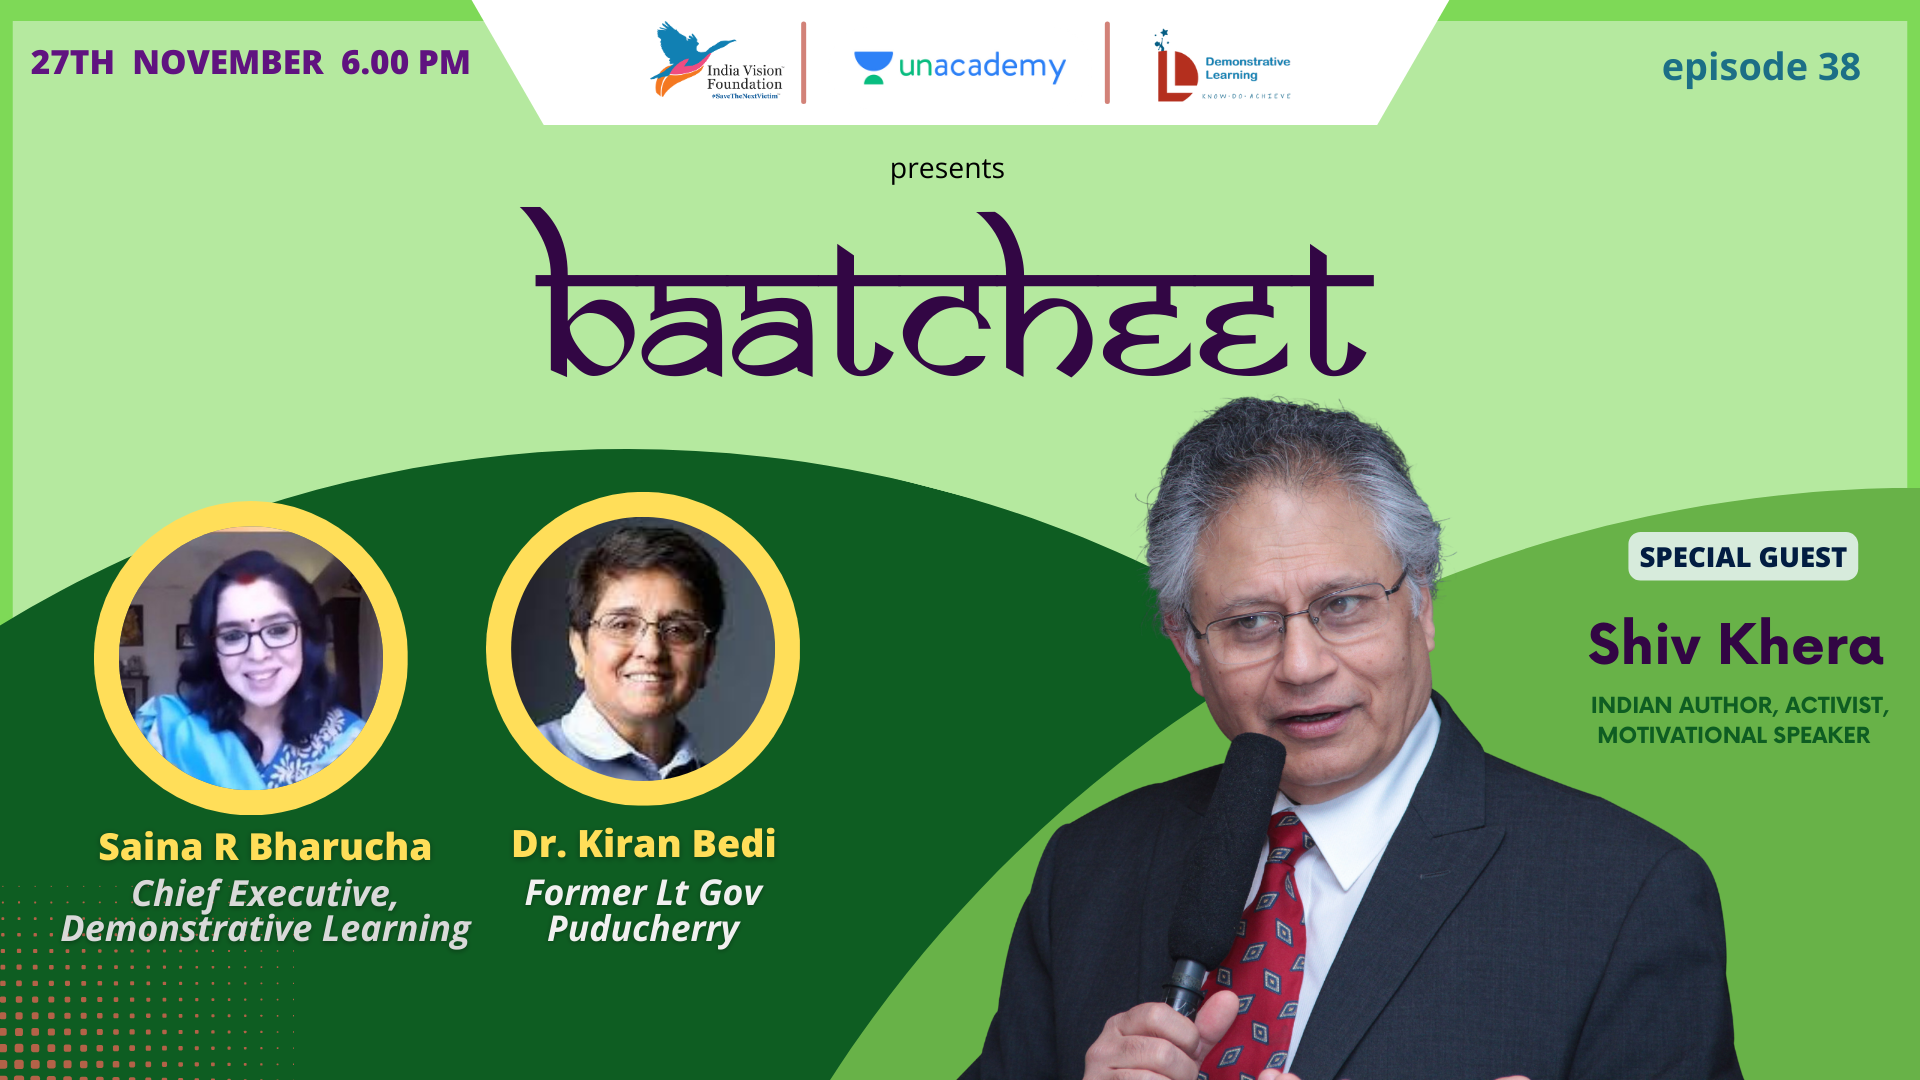 Baatcheet 38 with Shiv Khera